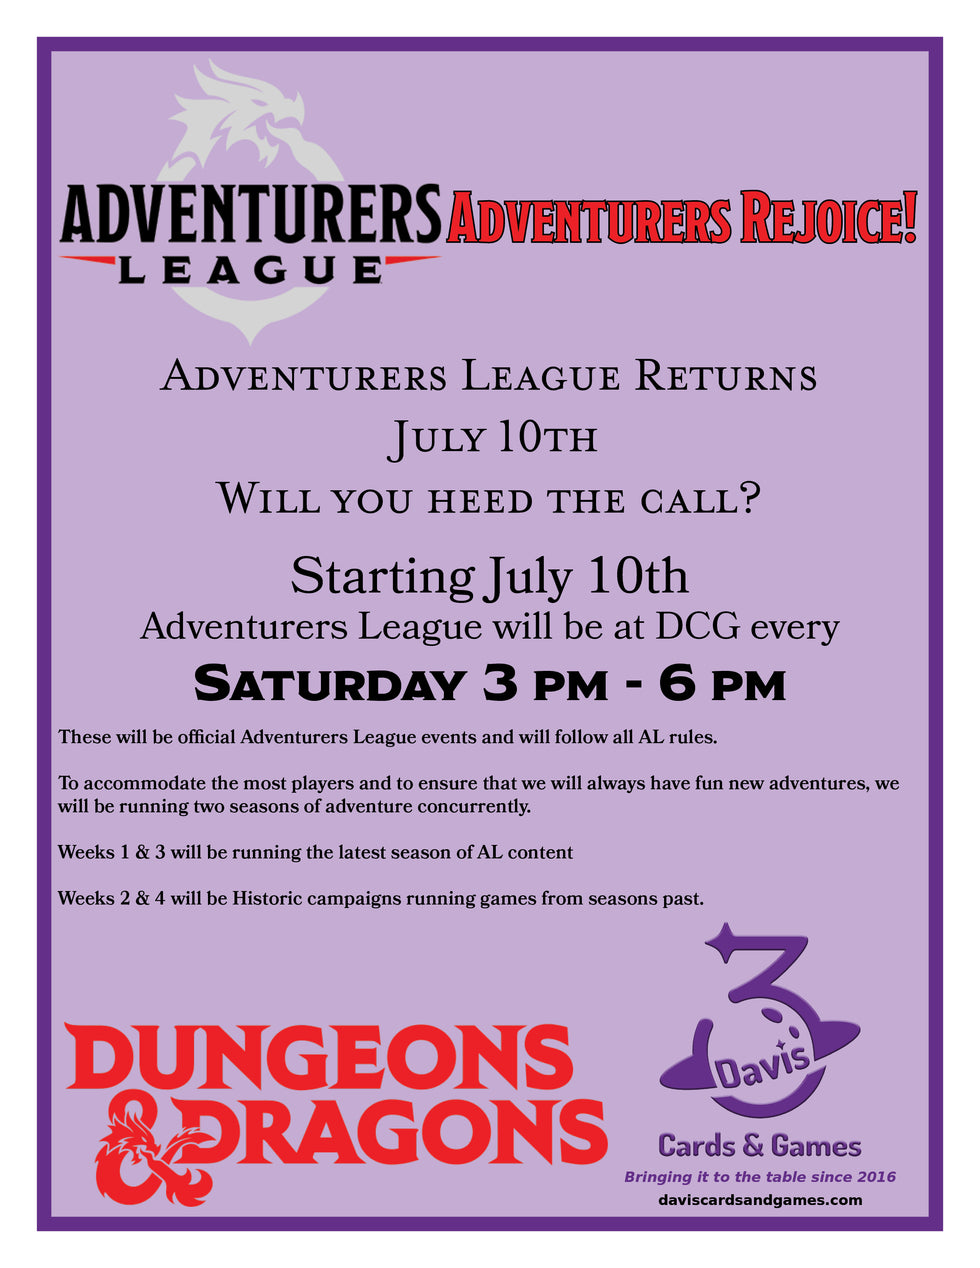 Adventurers Rejoice! Adventurers League returns to DCG